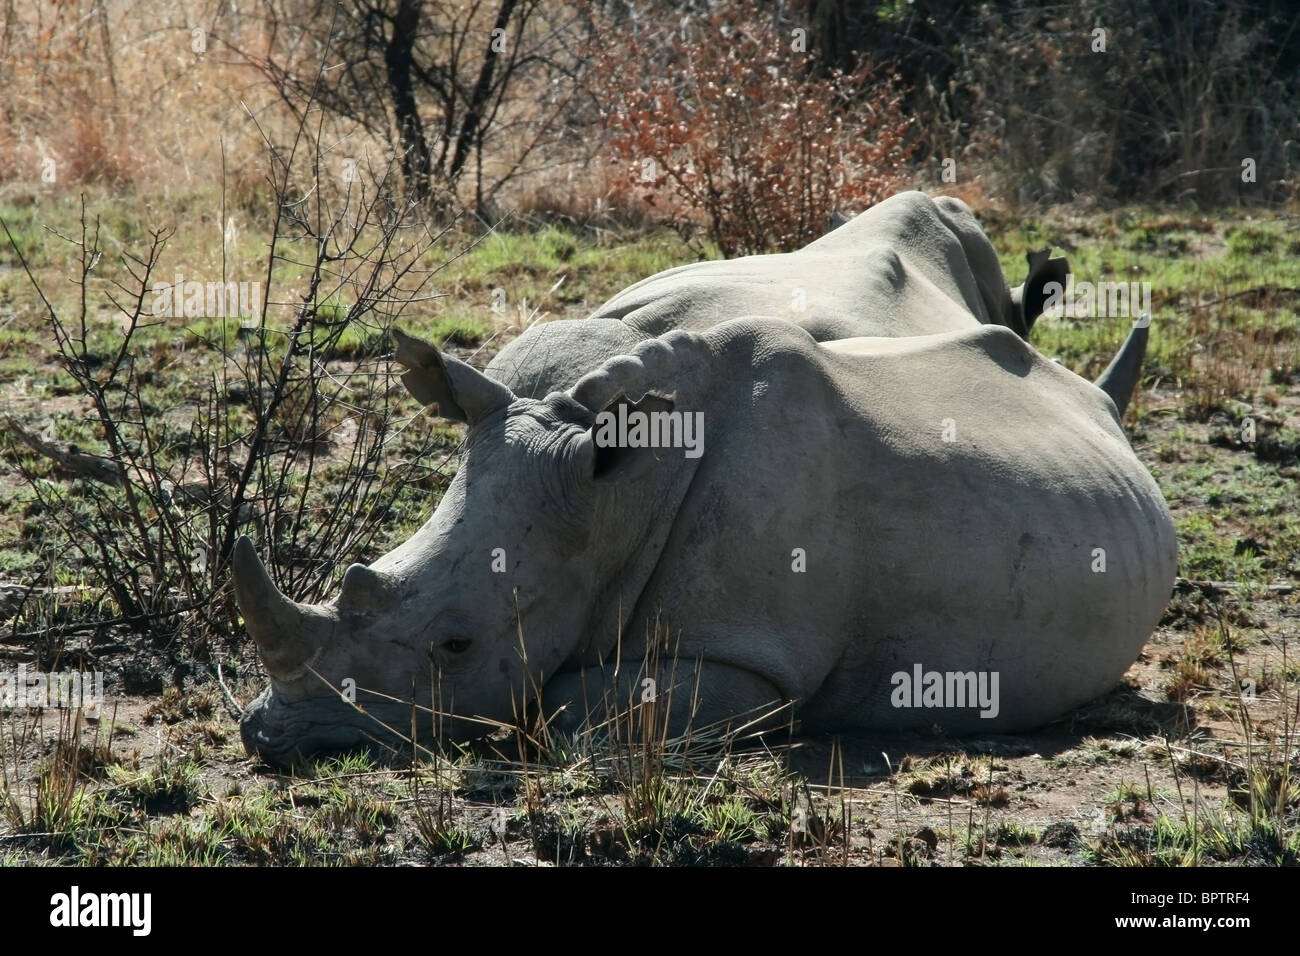 Rhinoceros in the South African safari park Stock Photo